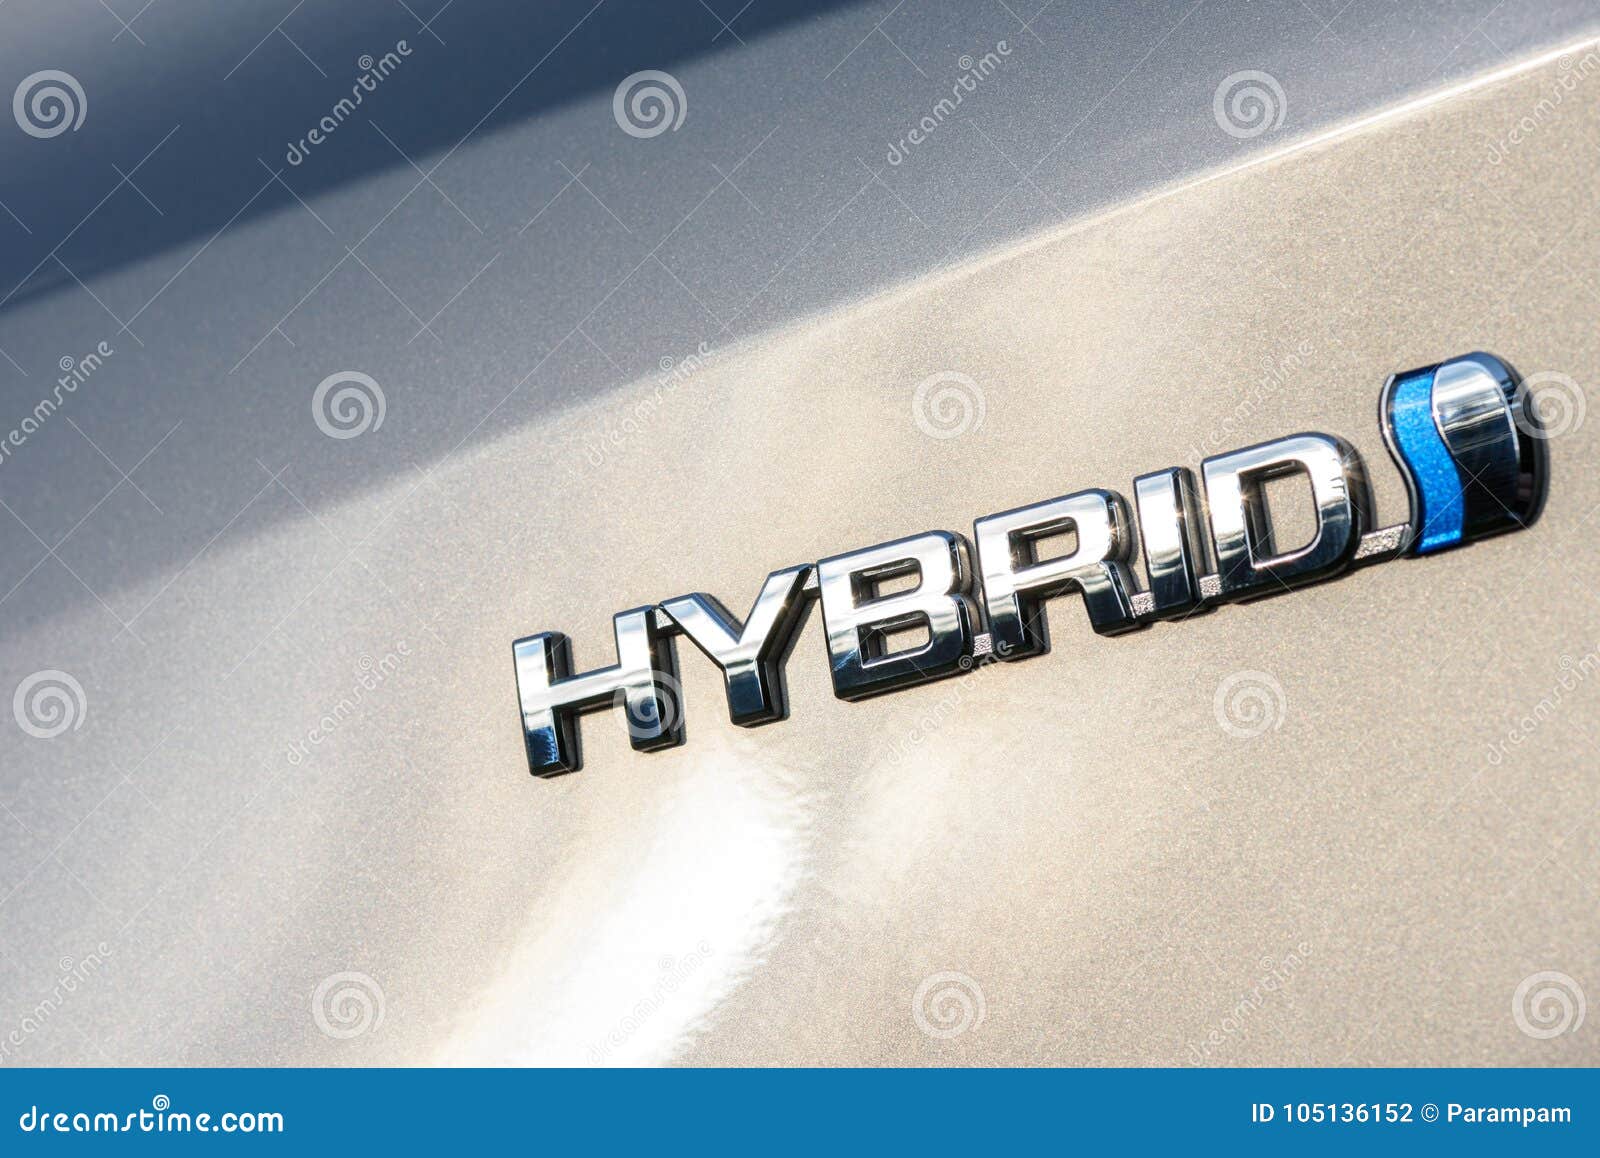 2017 hybrid vehicles